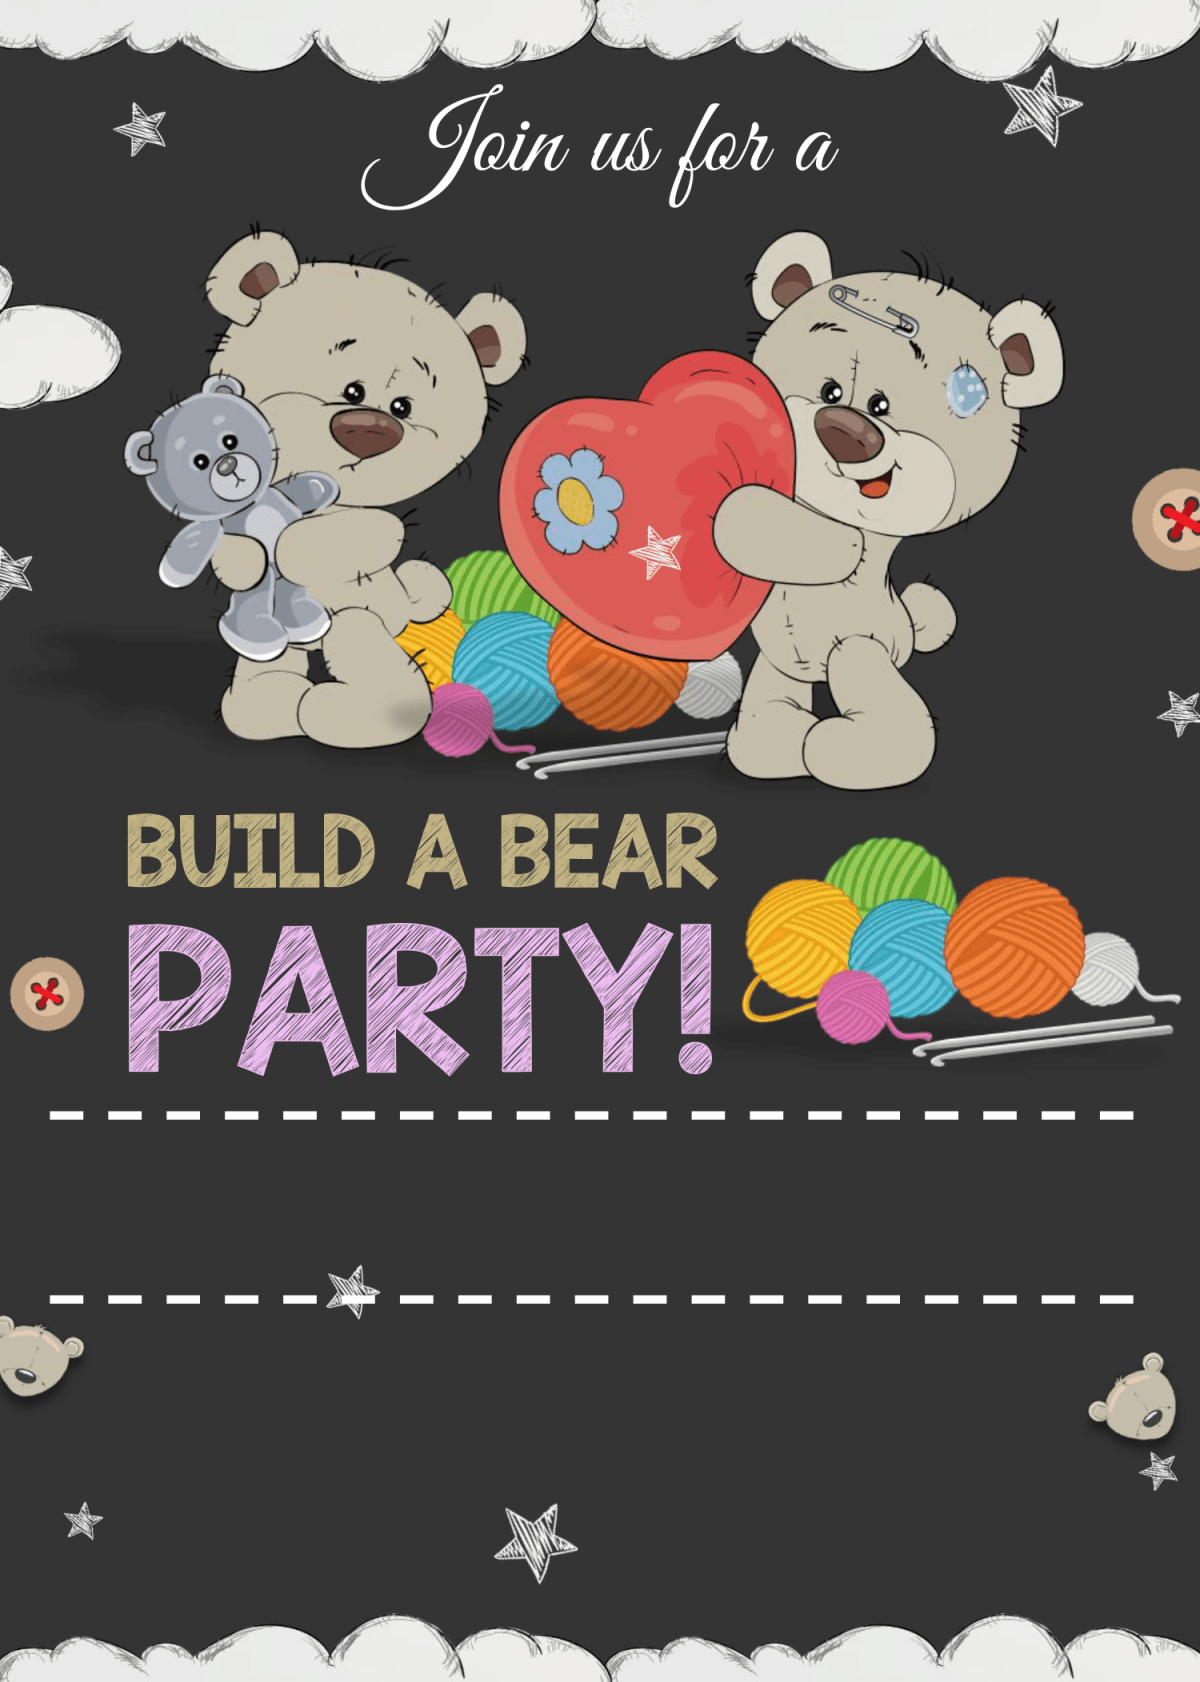 Build A Bear Birthday Invitation Templates - Editable With MS Word